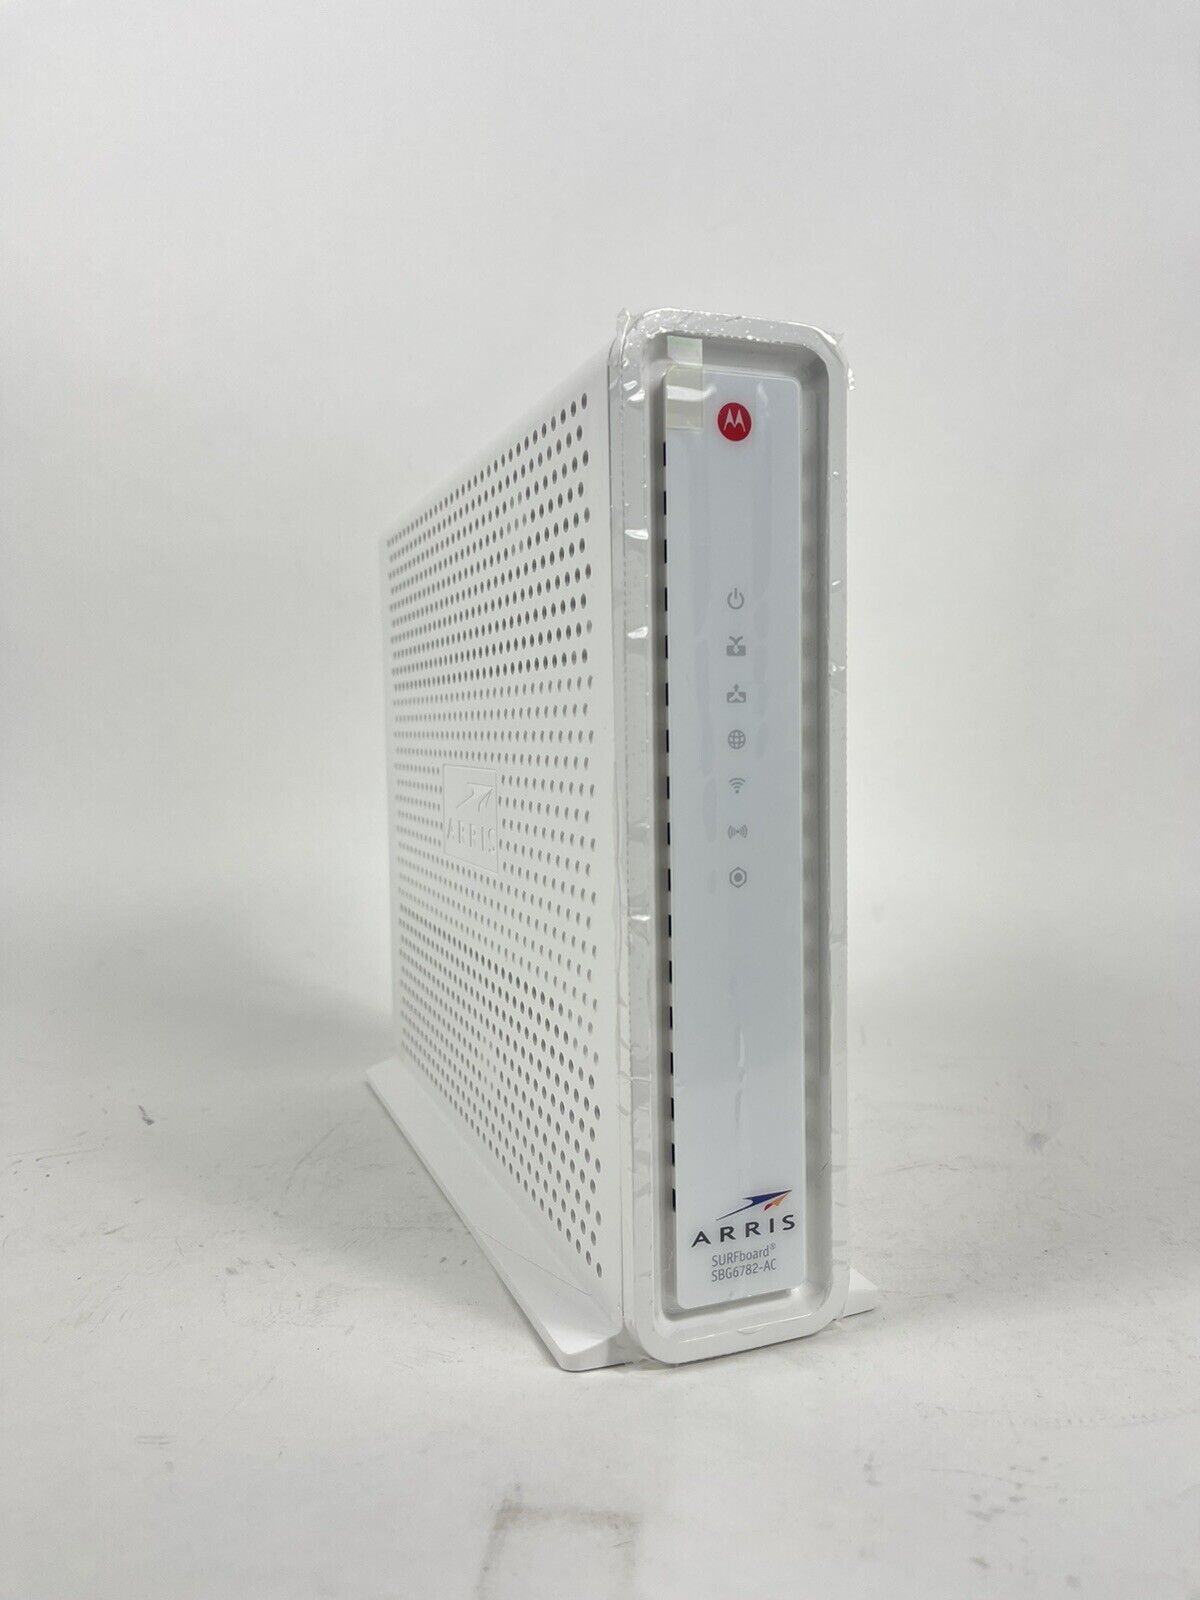 Motorola Surfboard Arris AC Modem Wifi Router AC1800M Original Box No RJ45 Cord